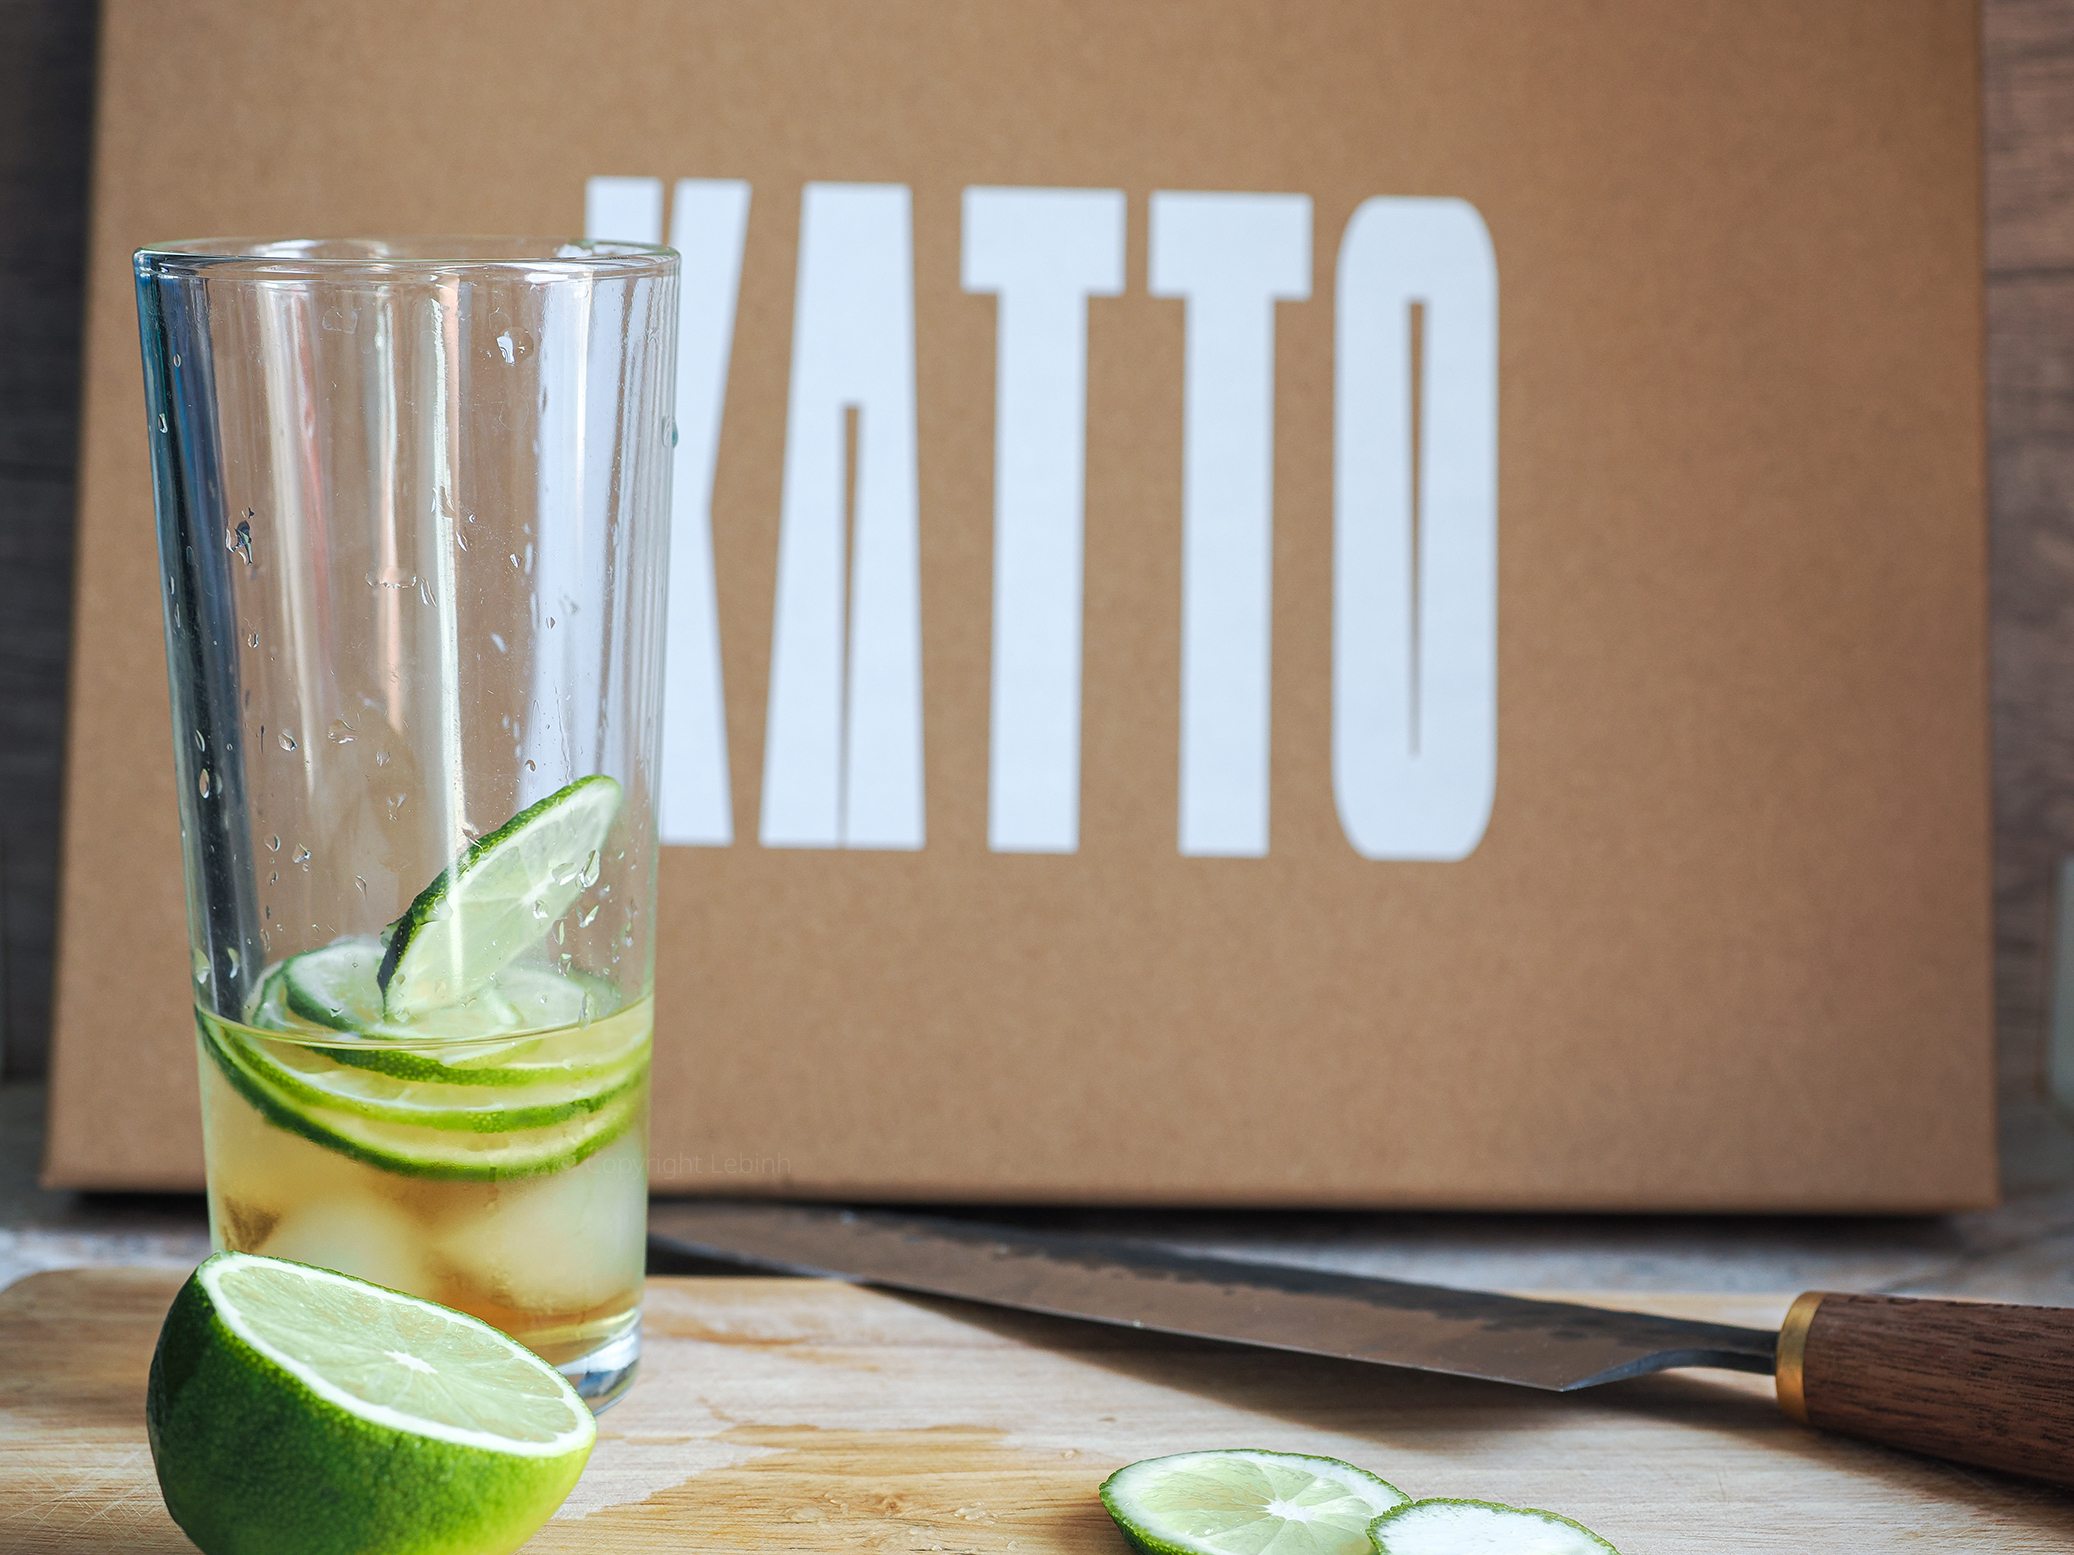 katto box and lime soda